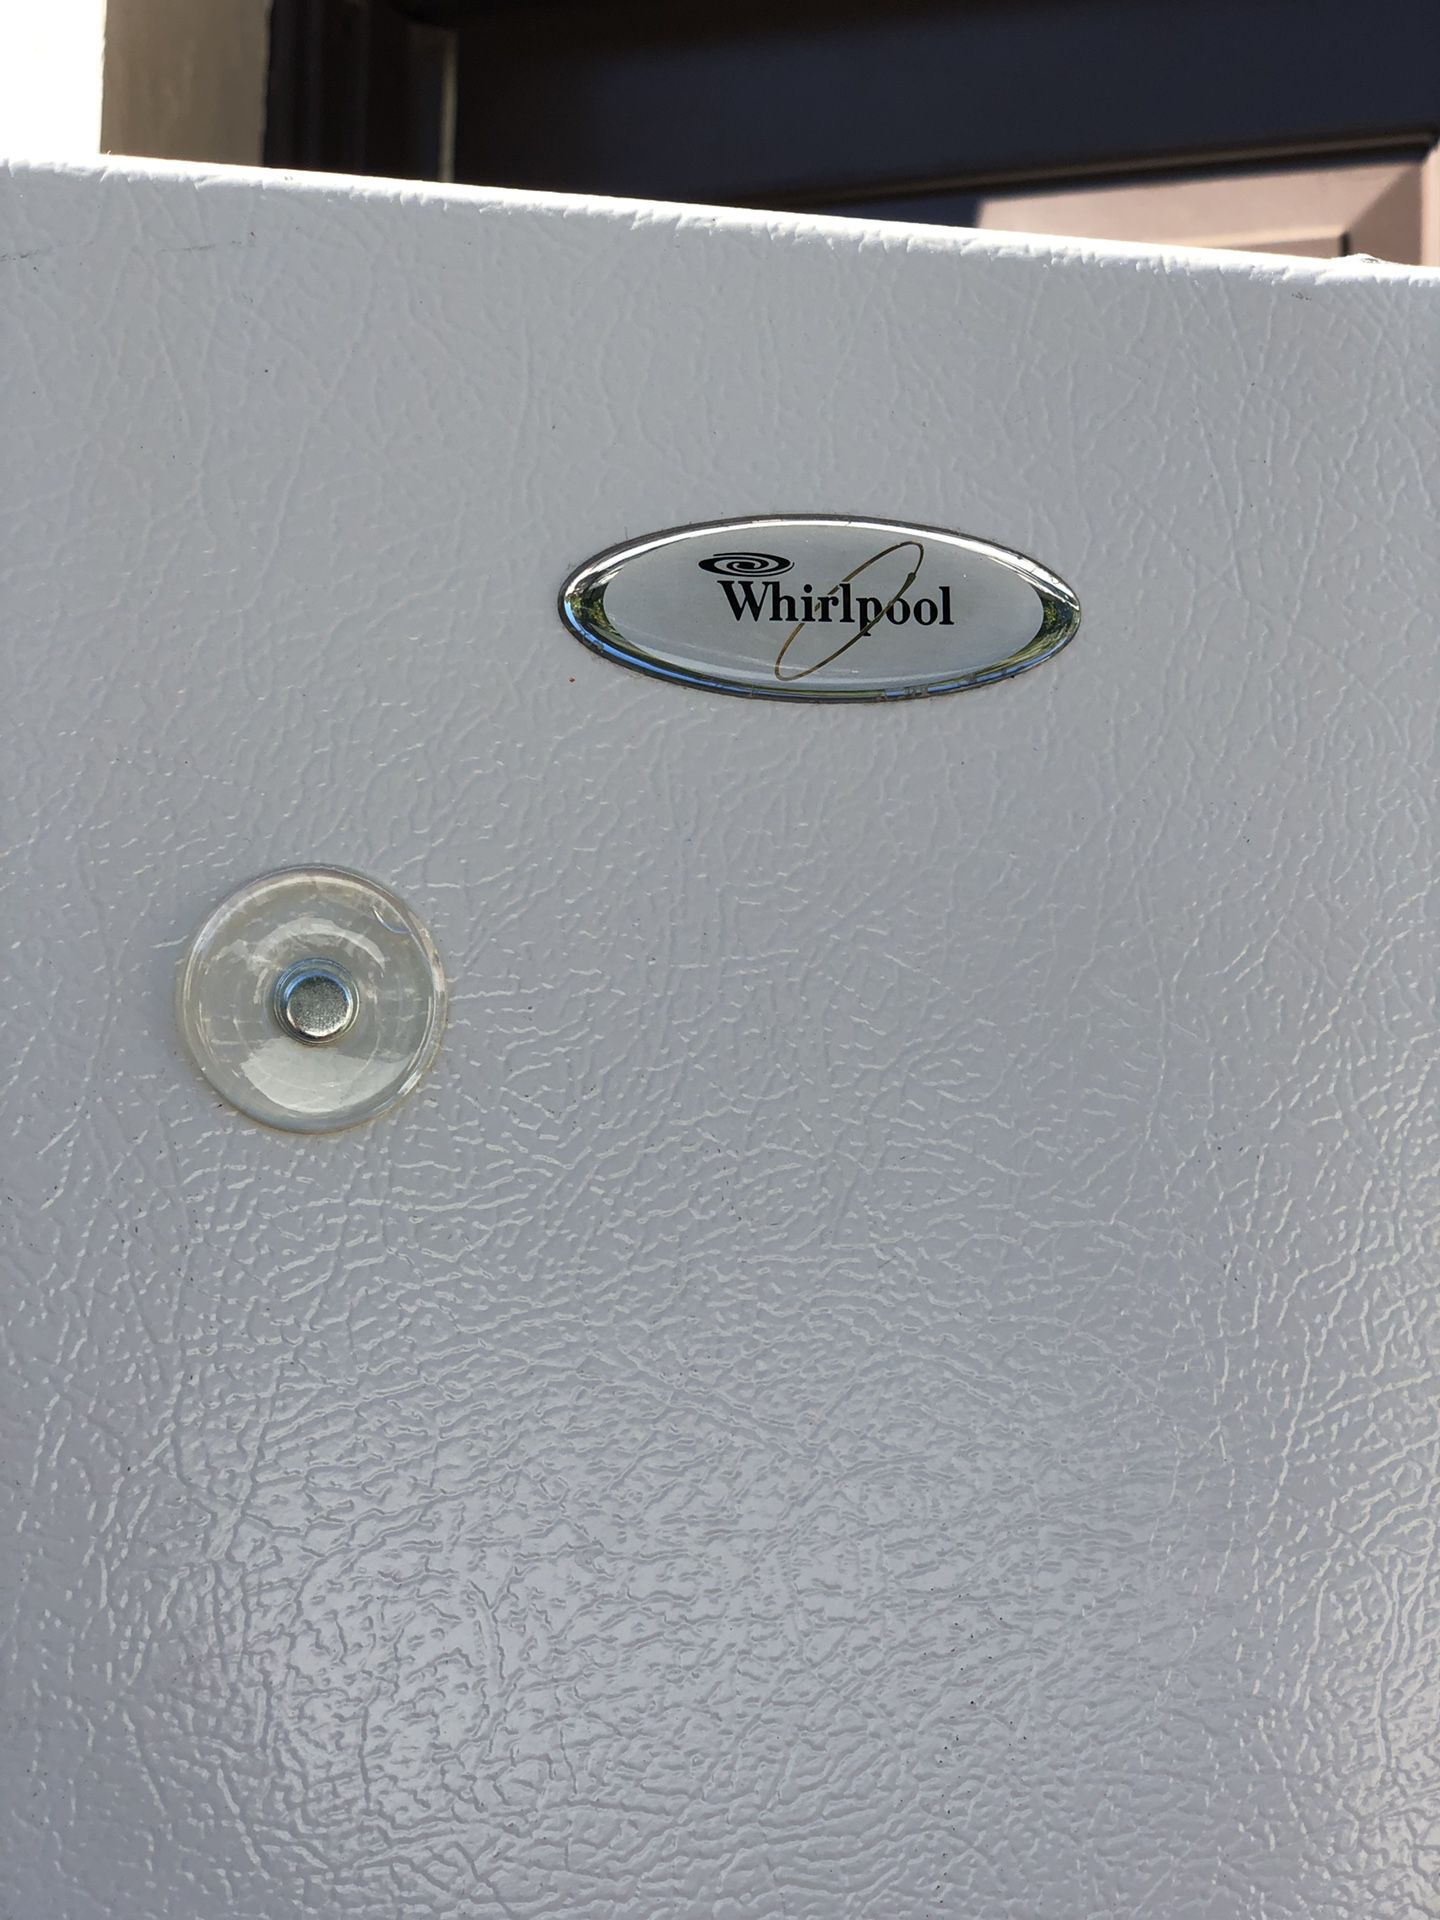 Whirlpool refrigerator for sale!